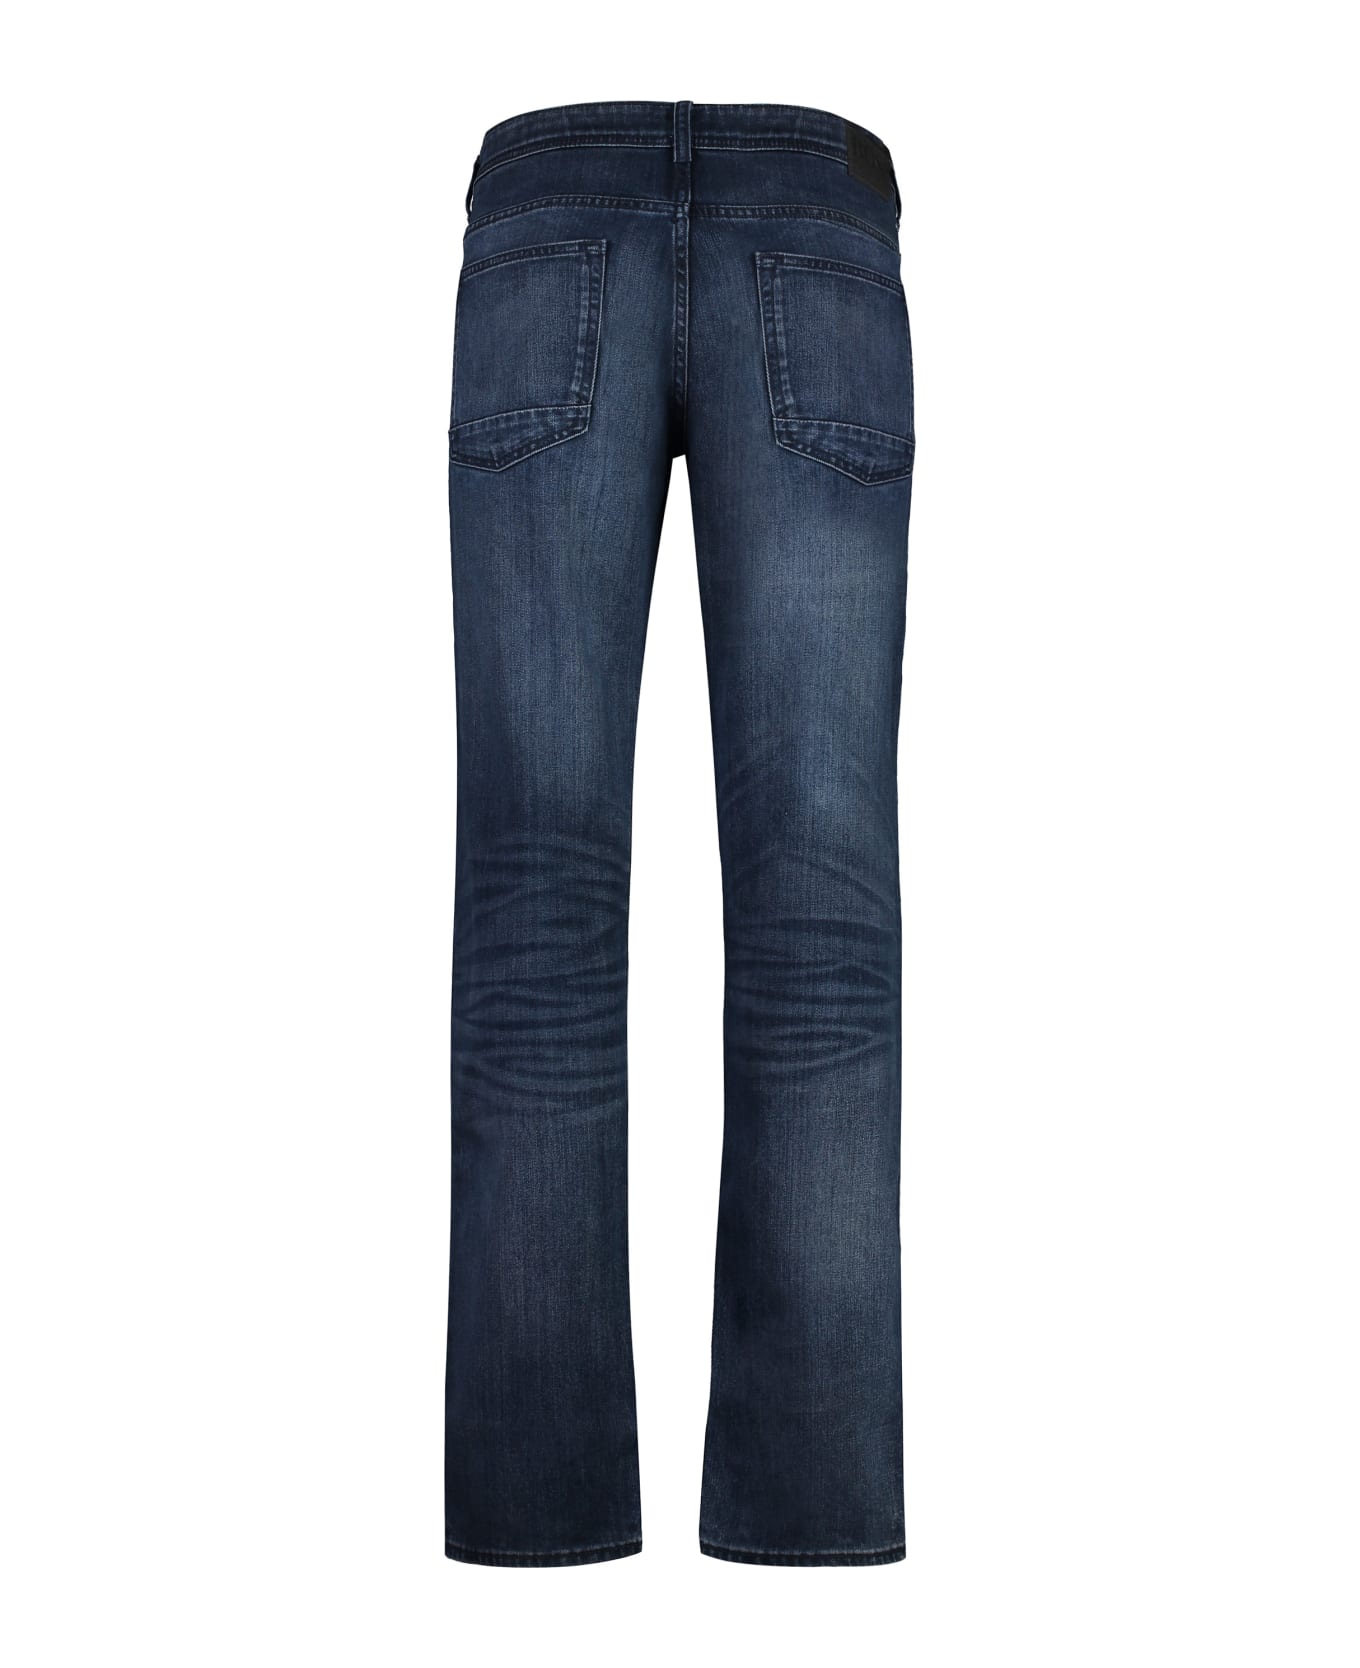 Hugo Boss Slim Fit Jeans - Denim